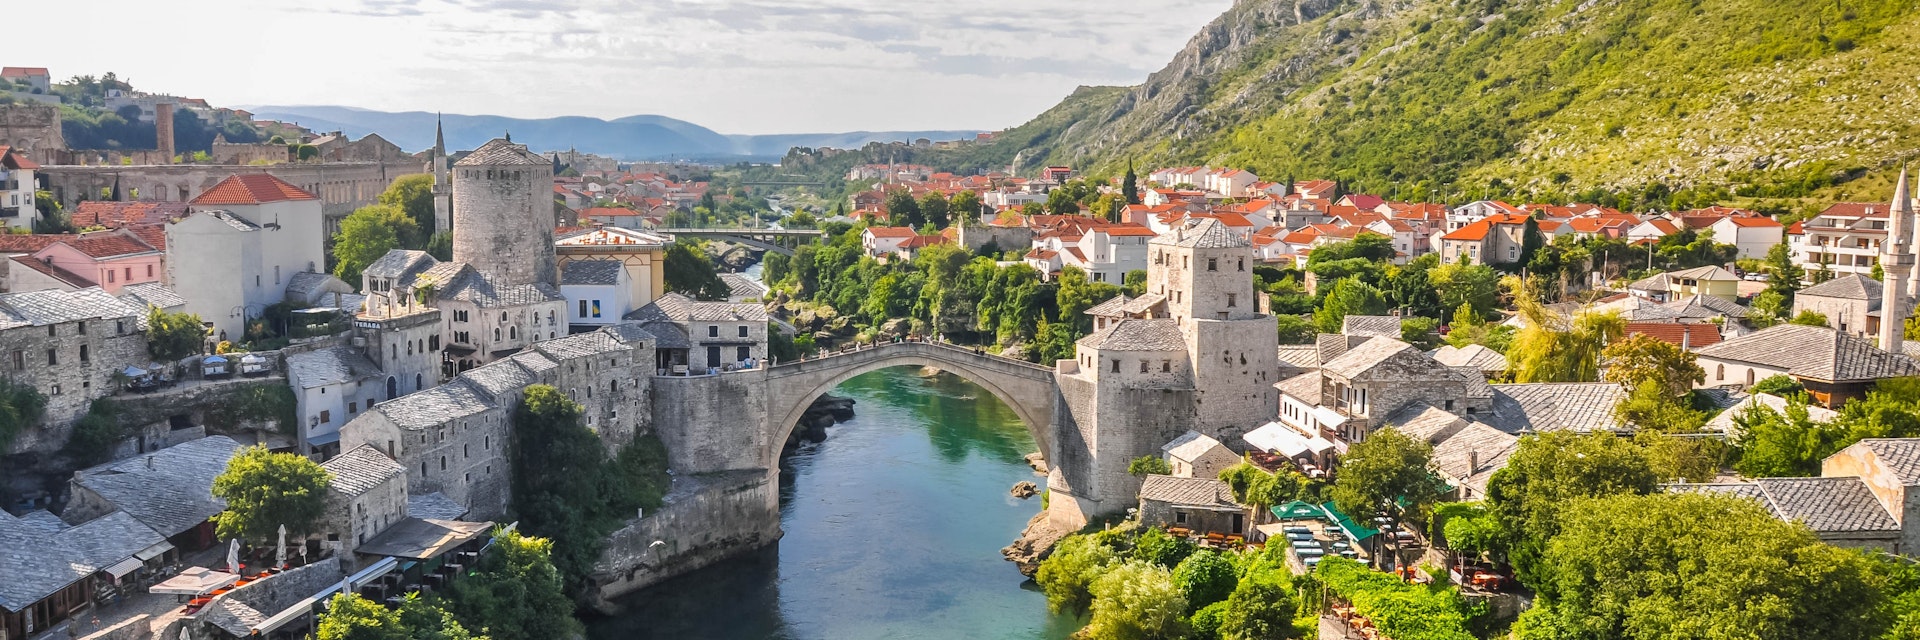 The Stari Most (Old Bridge) on the Neretva in Mostar, Bosnia